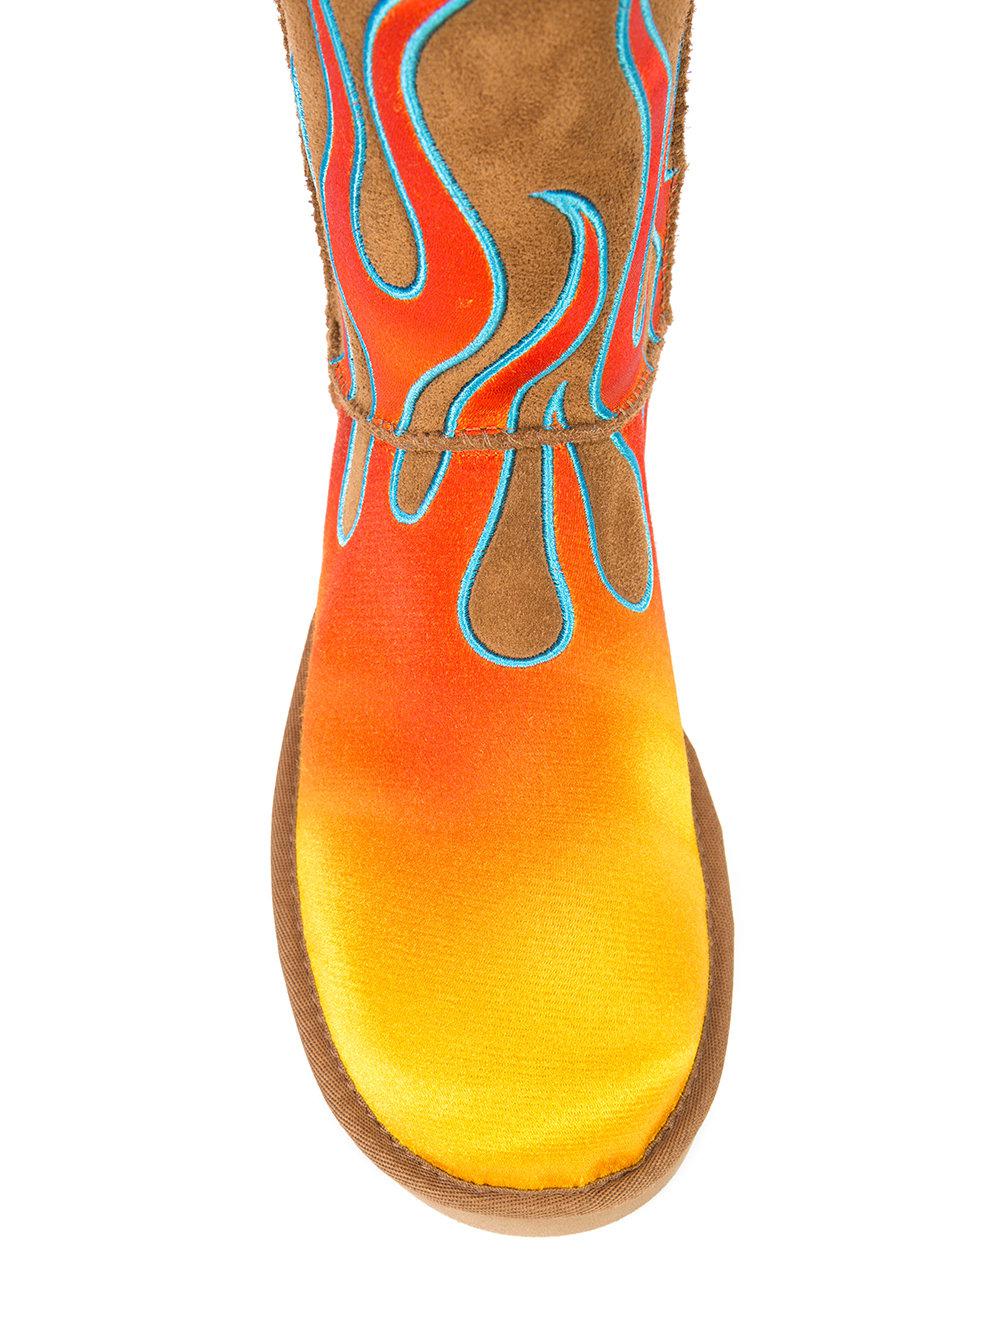 Jeremy Scott Ugg X Classic Short Flames Boots in Orange | Lyst